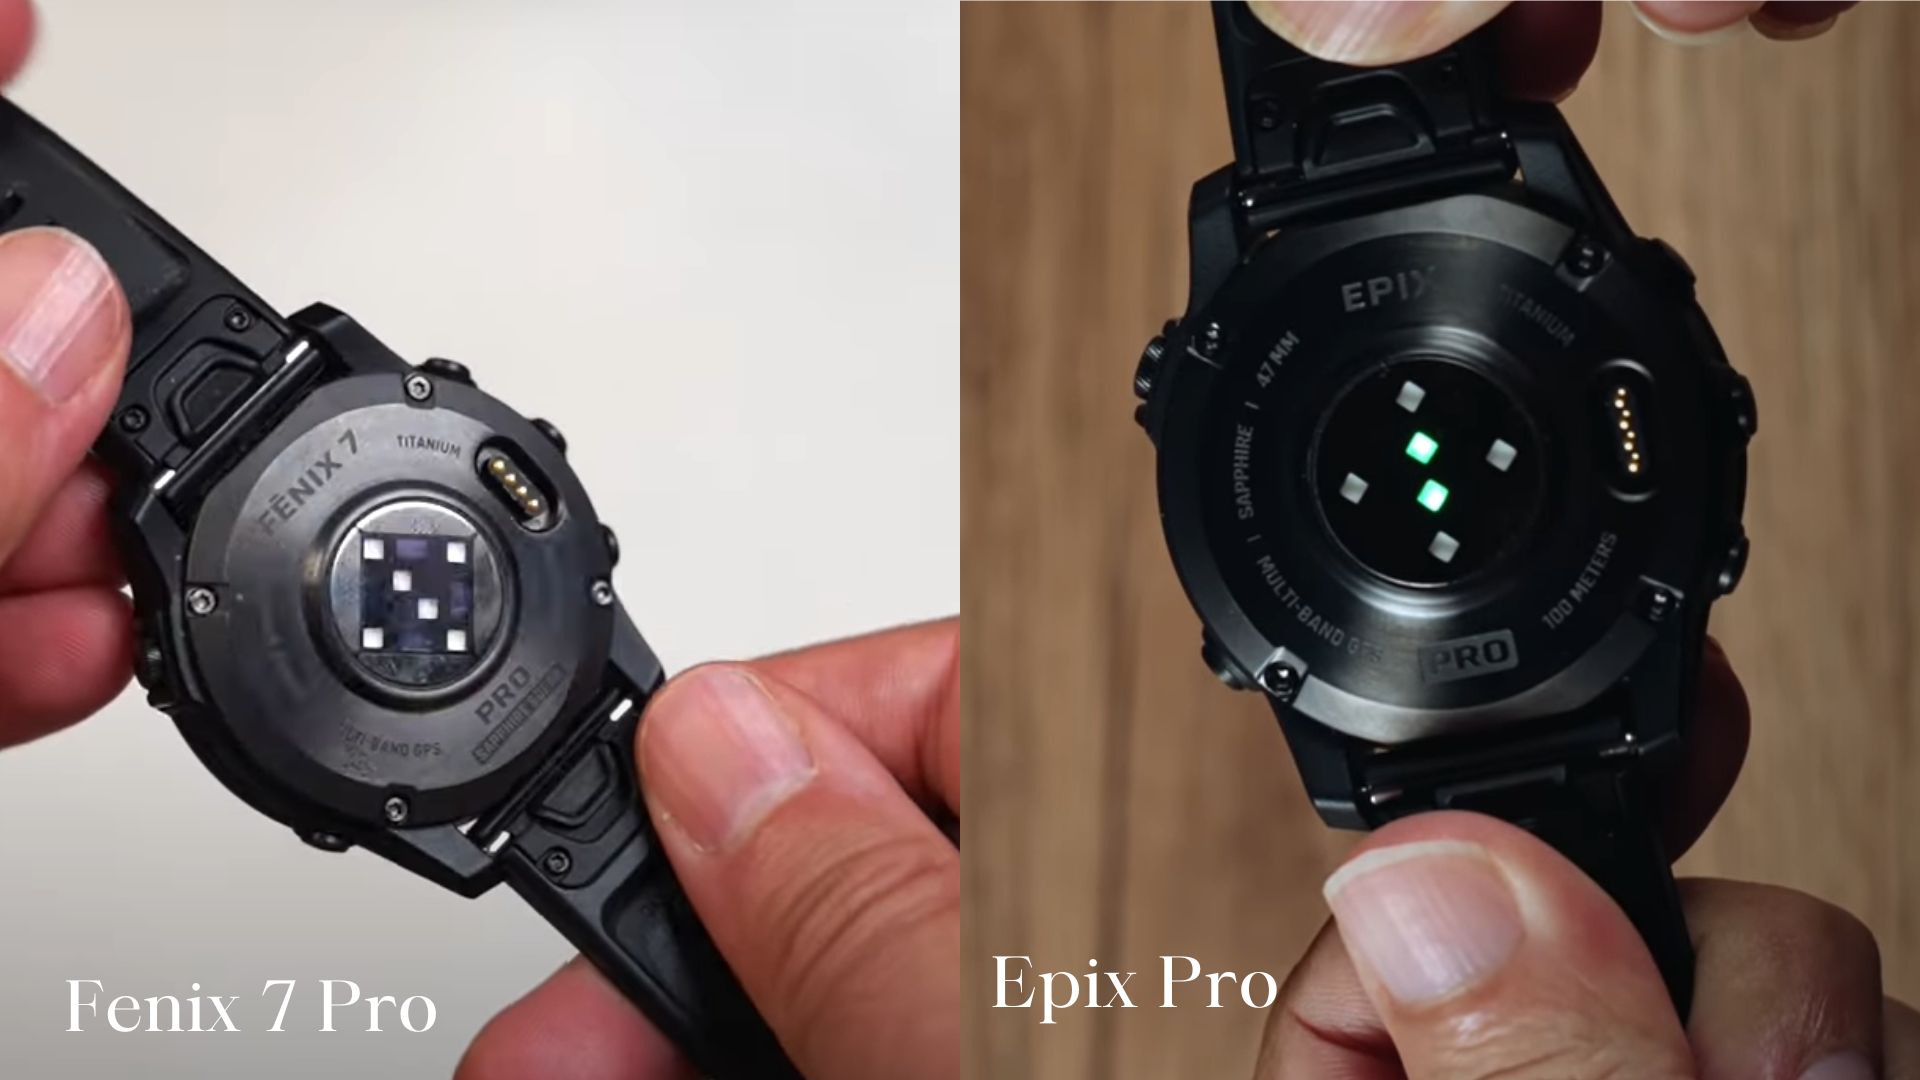 Epix Pro vs Fenix 7 Pro: Design 